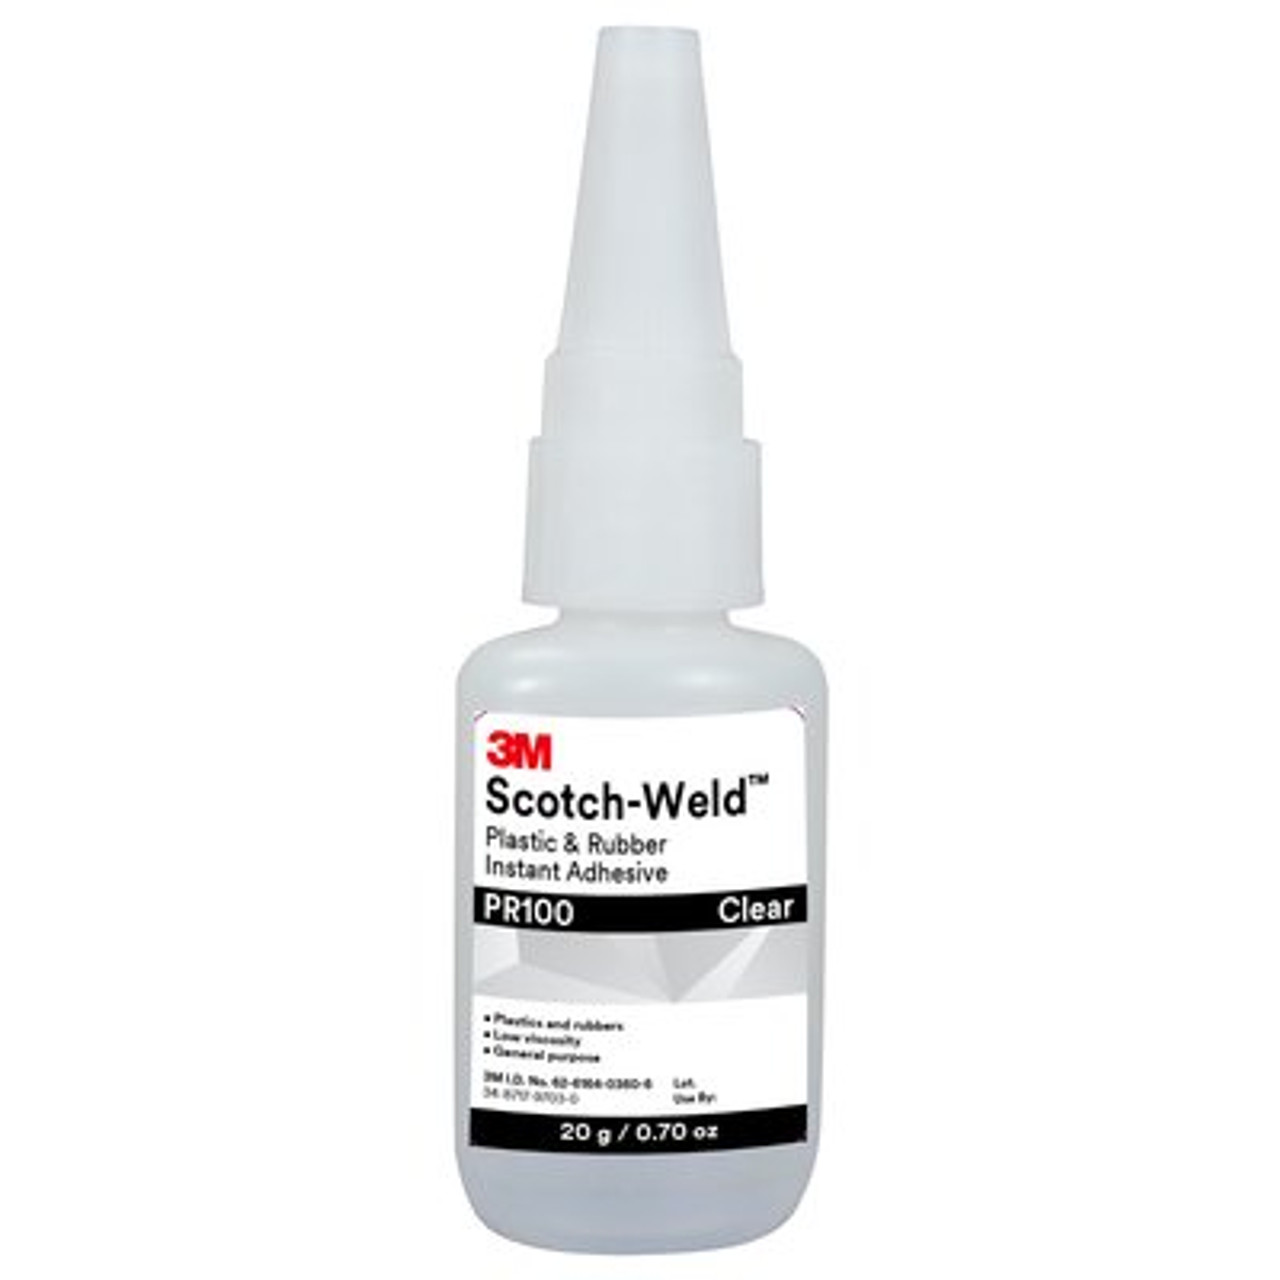 3M™ Scotch-Weld™ Plastic & Rubber Instant Adhesive PR100, Clear, 20 Gram Bottle